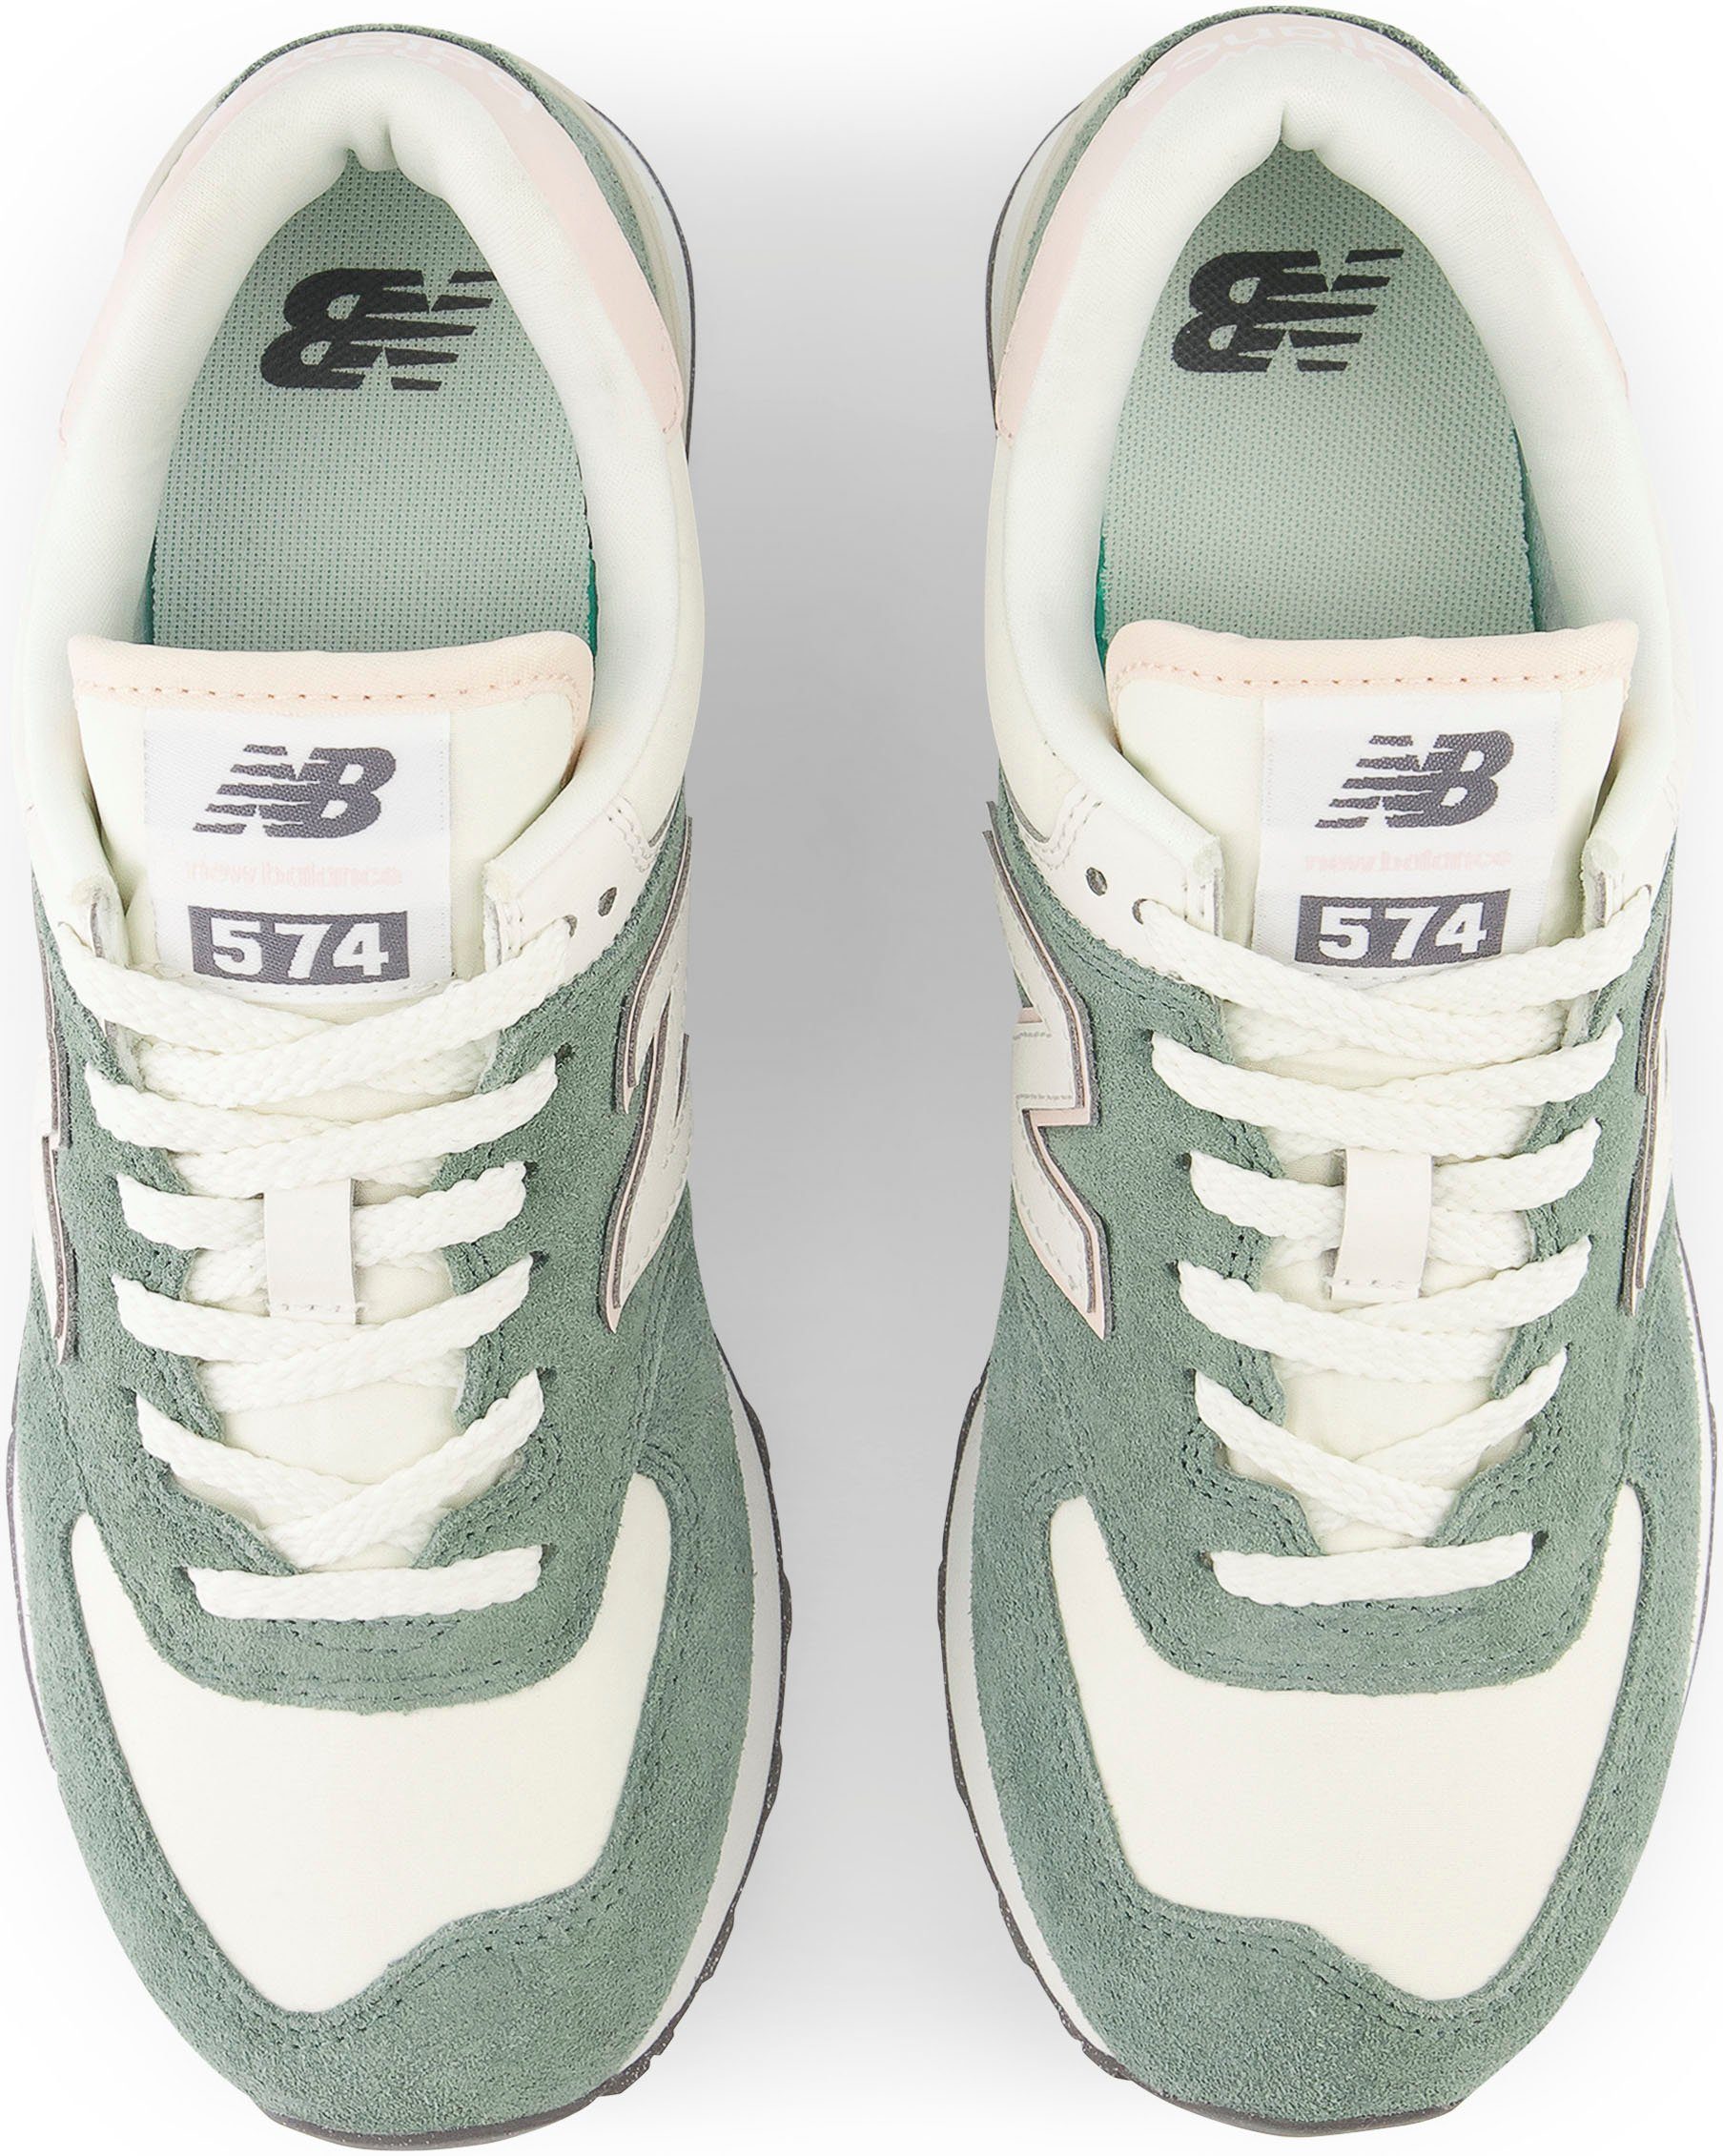 New Balance WL574 Sneaker grün-beige